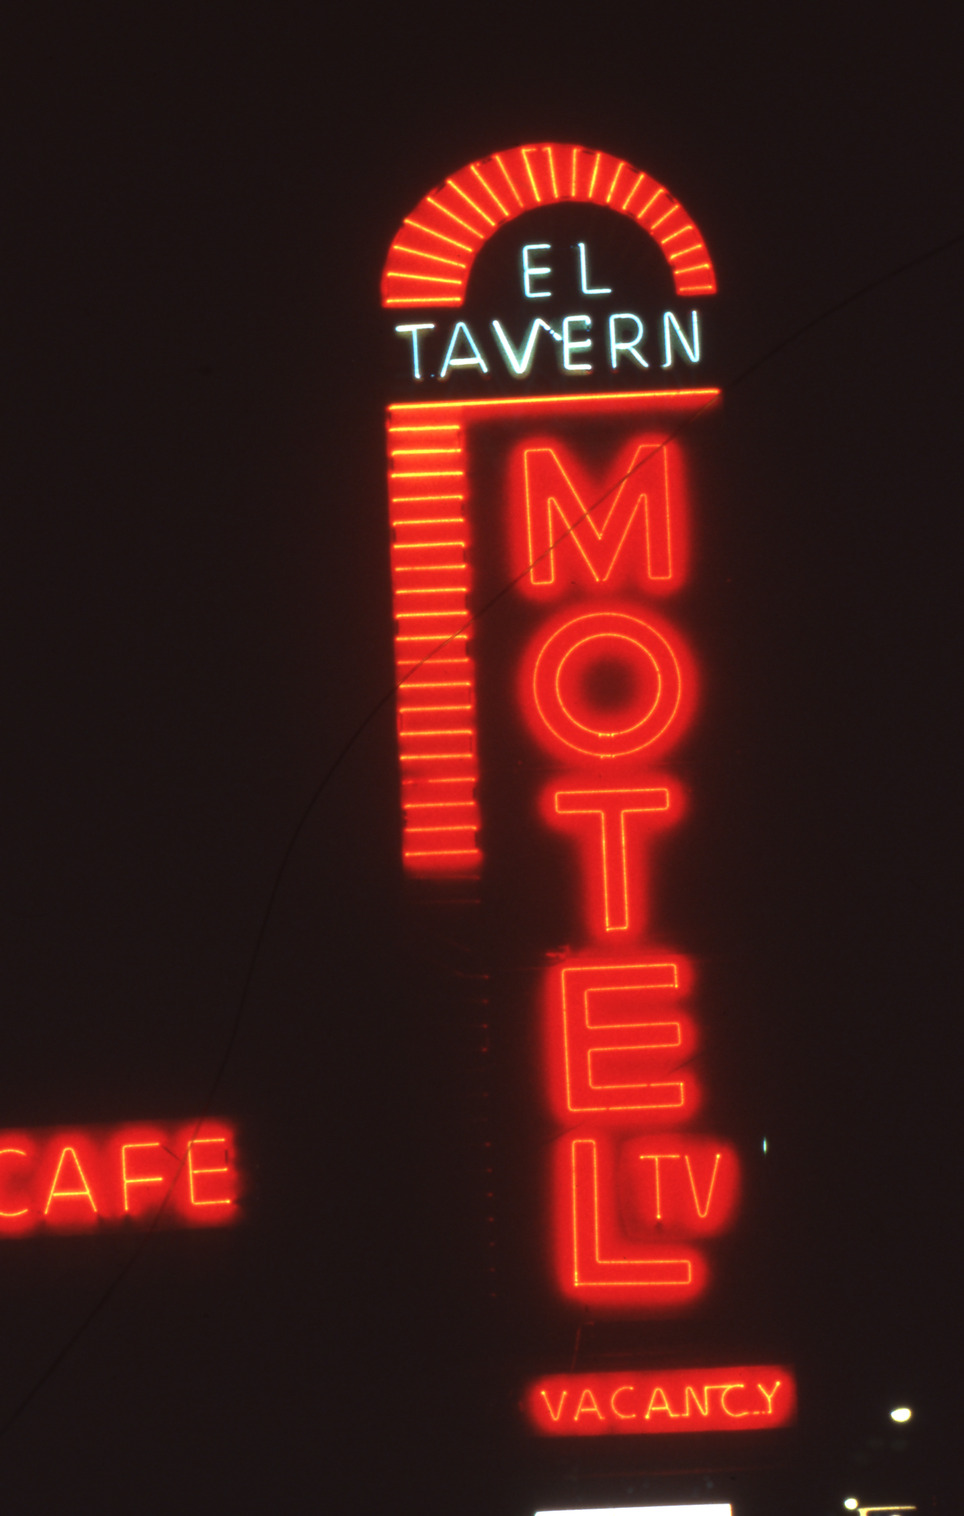 El Tavern Motel roof mounted sign, Reno, Nevada: photographic print